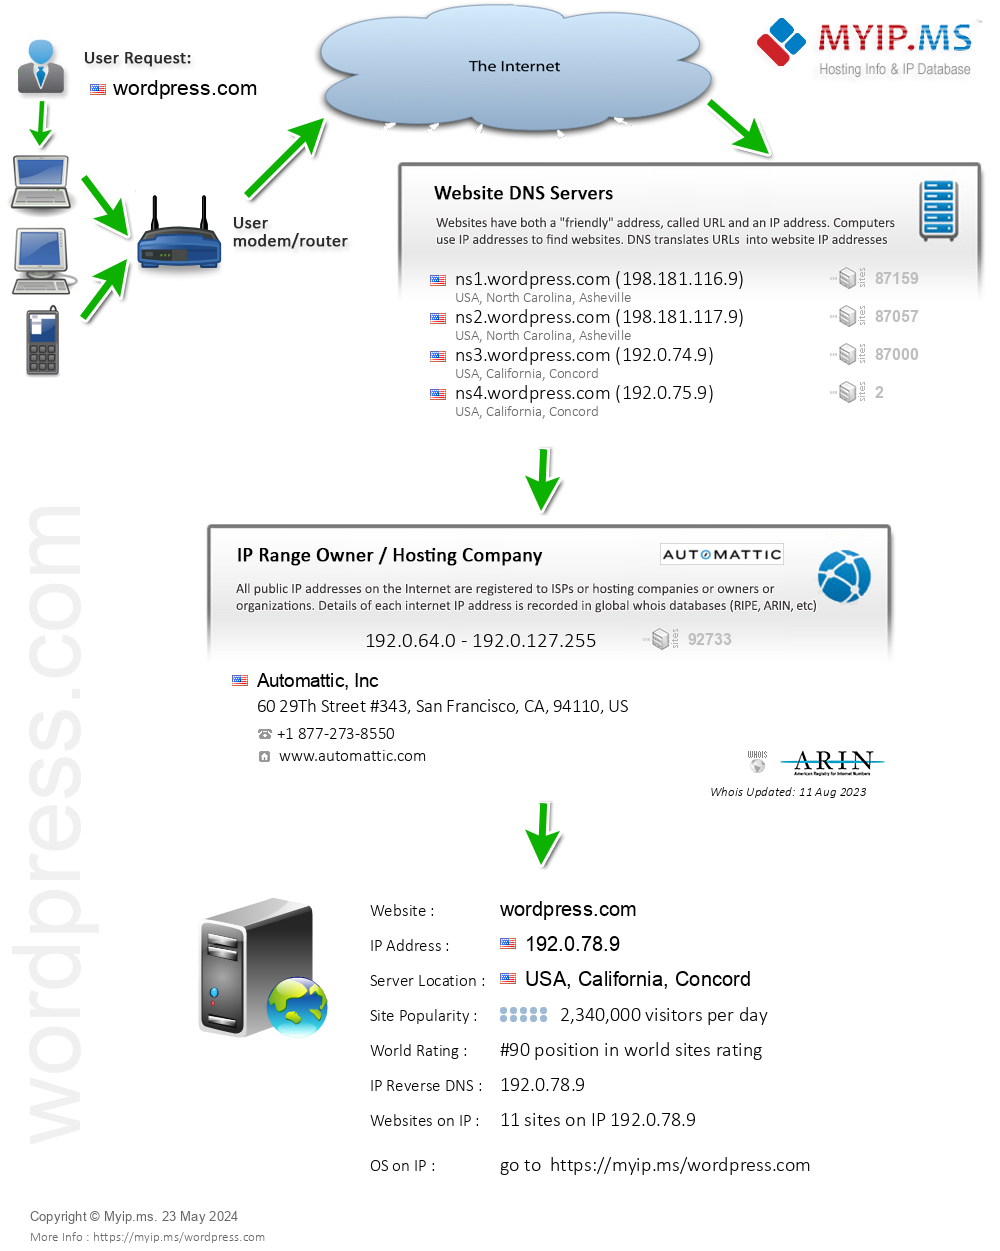 Wordpress.com - Website Hosting Visual IP Diagram